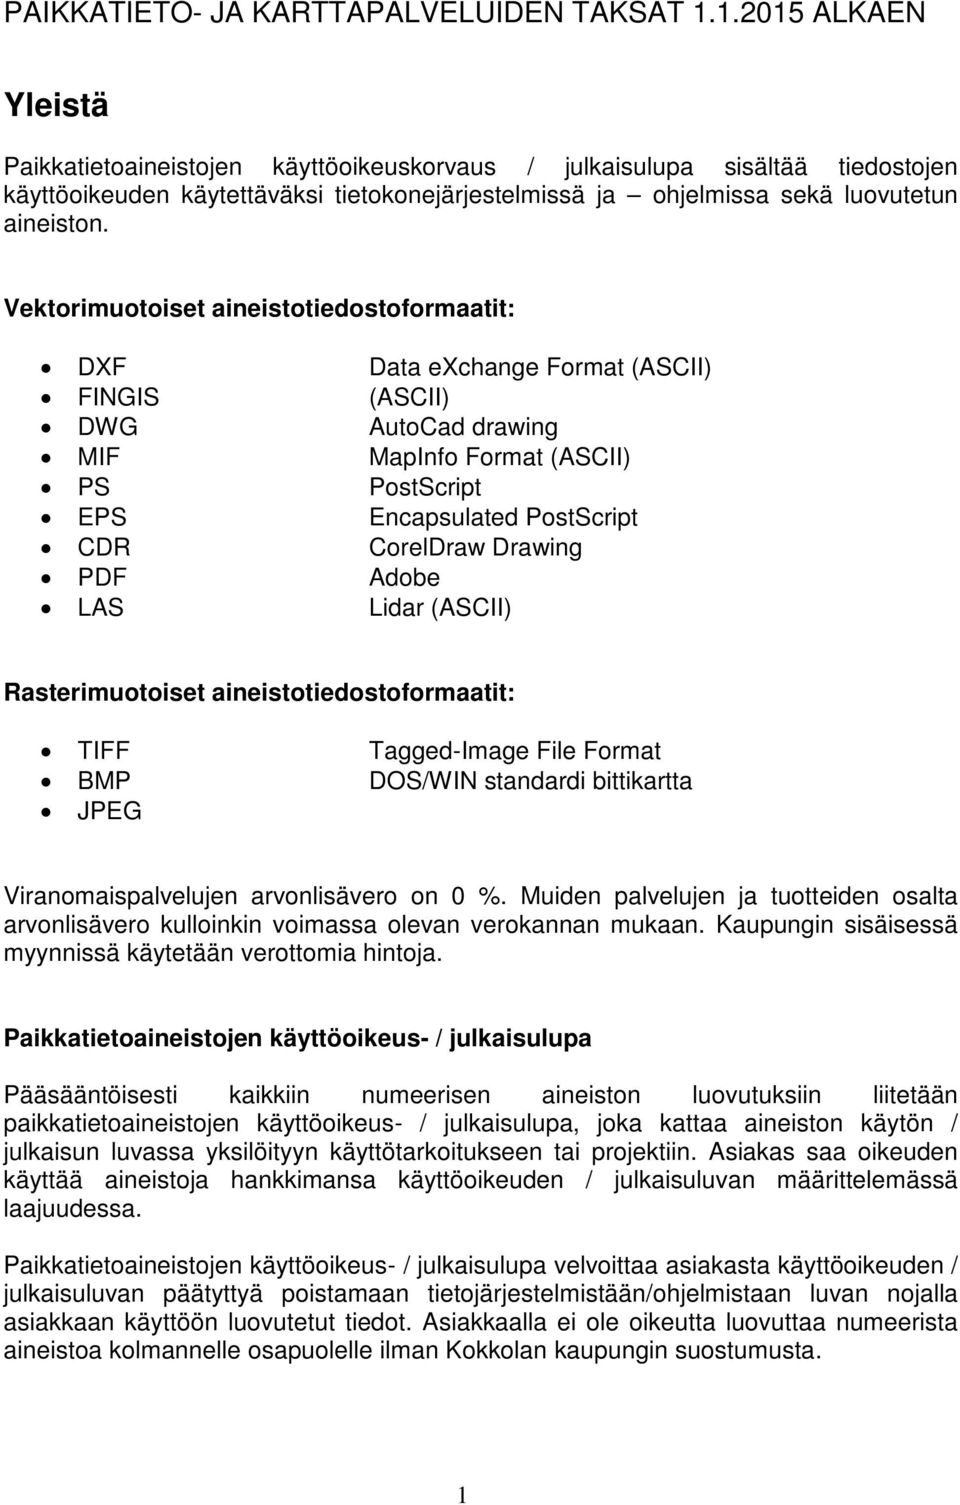 Vektorimuotoiset aineistotiedostoformaatit: DXF Data exchange Format (ASCII) FINGIS (ASCII) DWG AutoCad drawing MIF MapInfo Format (ASCII) PS PostScript EPS Encapsulated PostScript CDR CorelDraw